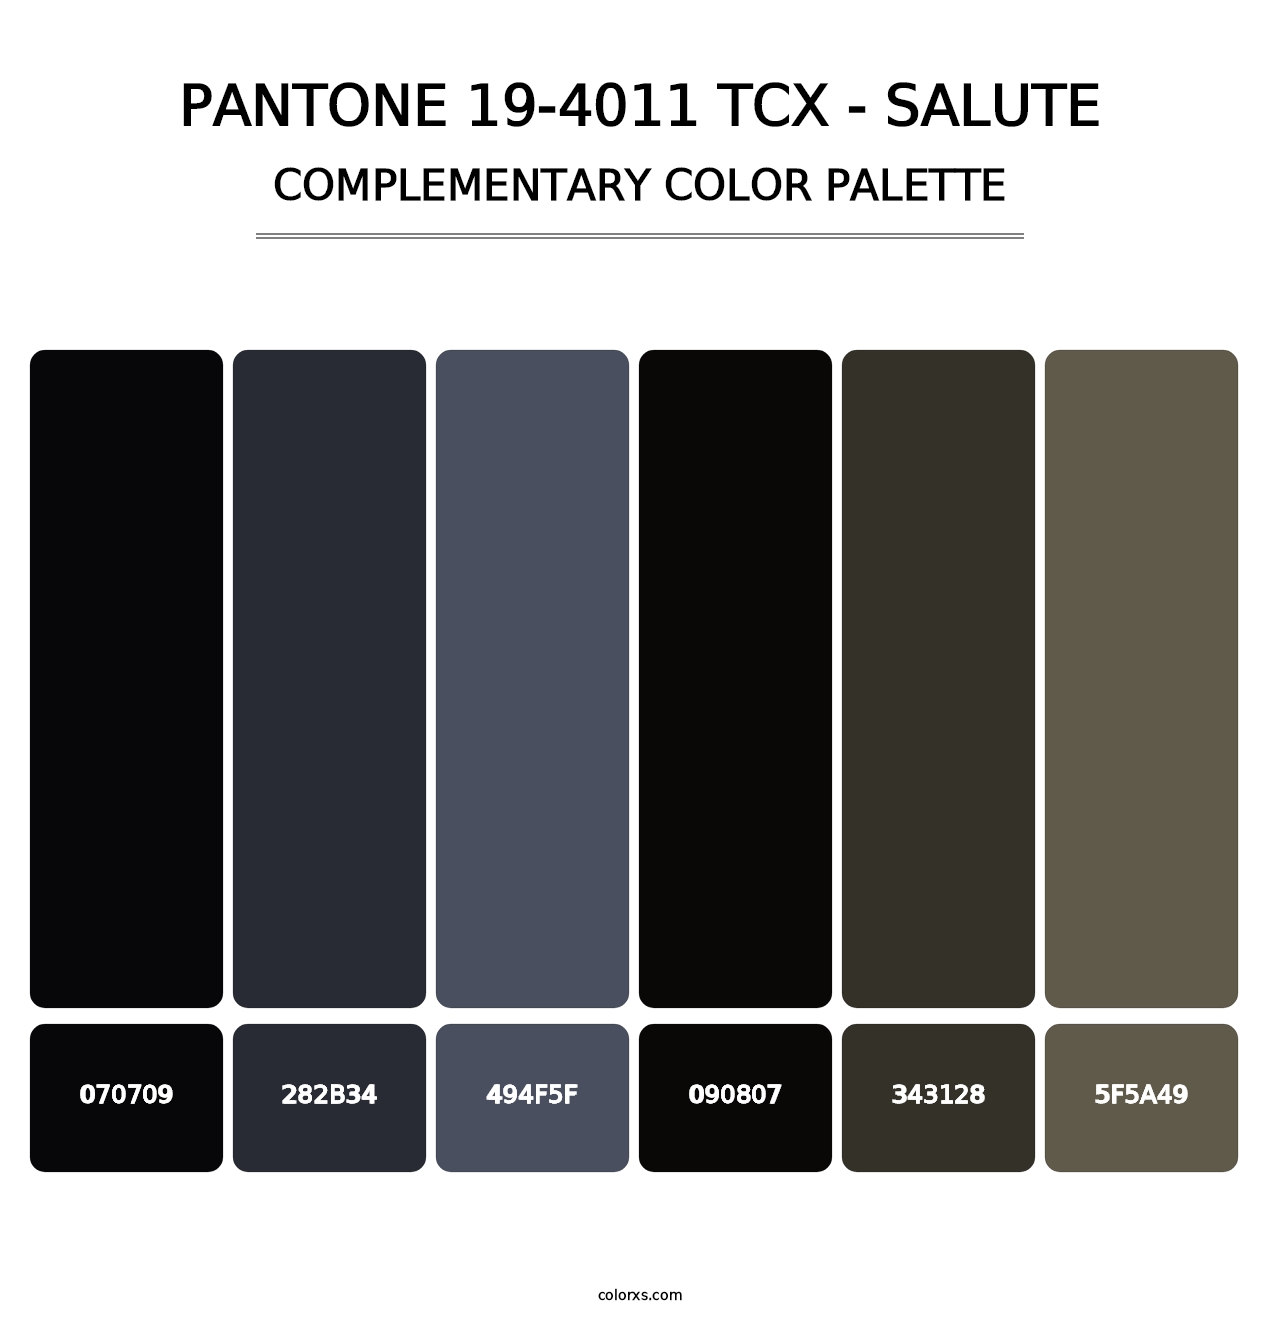 PANTONE 19-4011 TCX - Salute - Complementary Color Palette